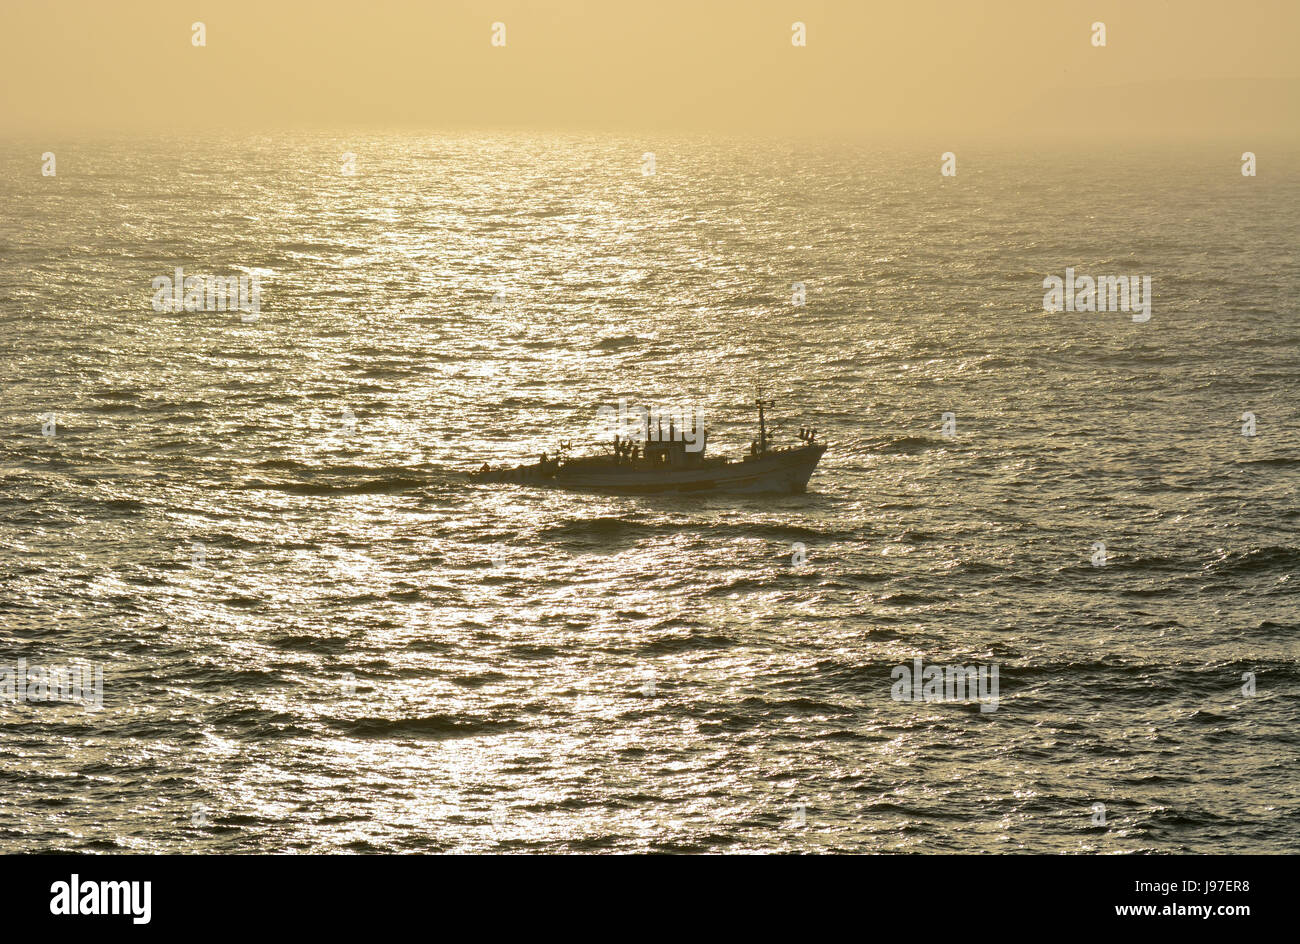 Un barco de pesca tradicional (traineira) saliendo al Océano Atlántico al atardecer. Peniche, Portugal Foto de stock